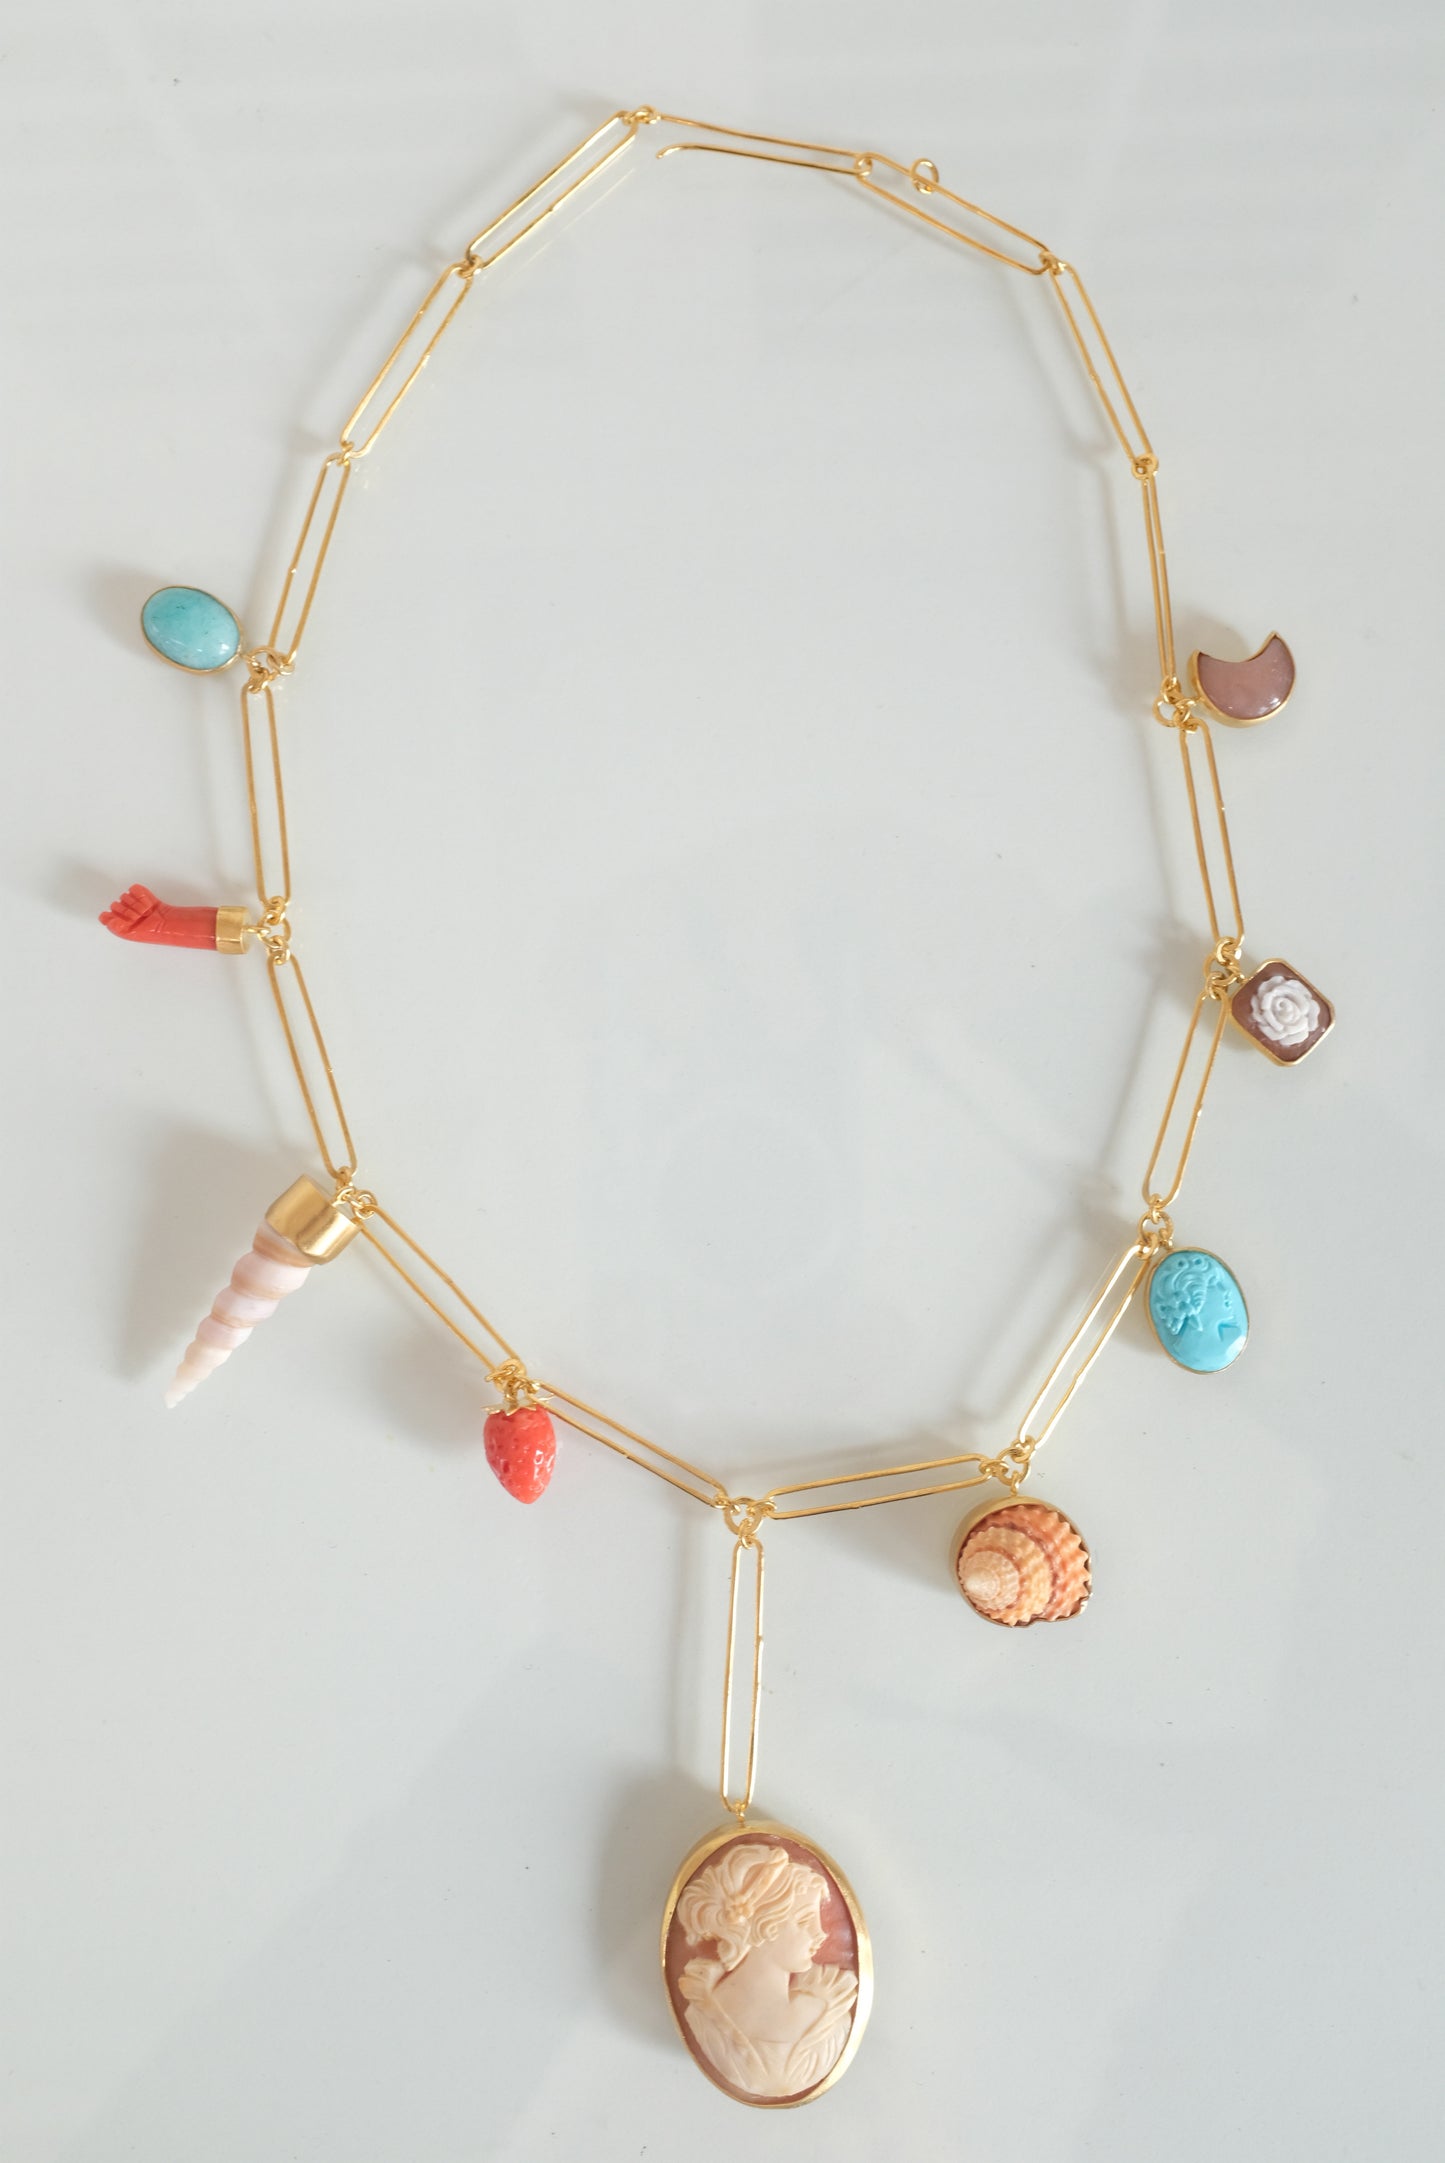 Grainne Morton Handmade Chain Charm Necklace